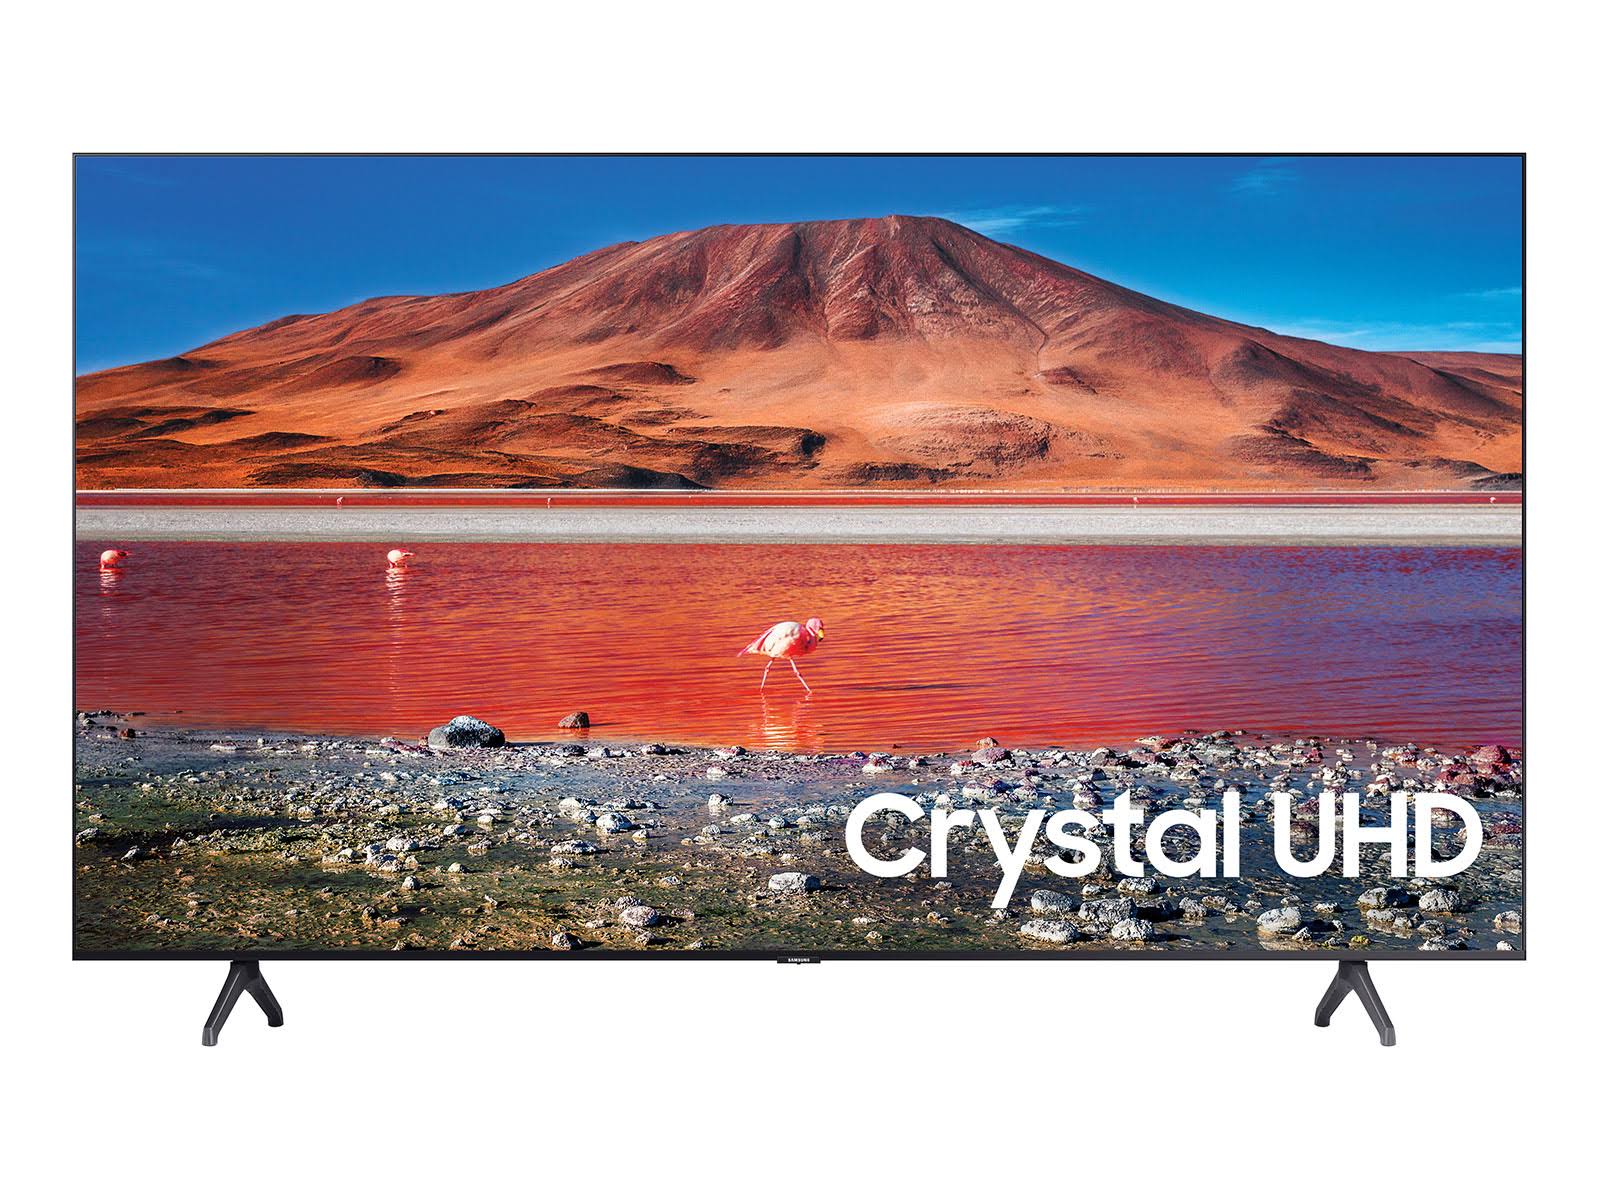 Samsung 43" Class TU7000 Series Crystal UHD 4K Smart TV (UN43TU7000FXZA, 2020 Model)